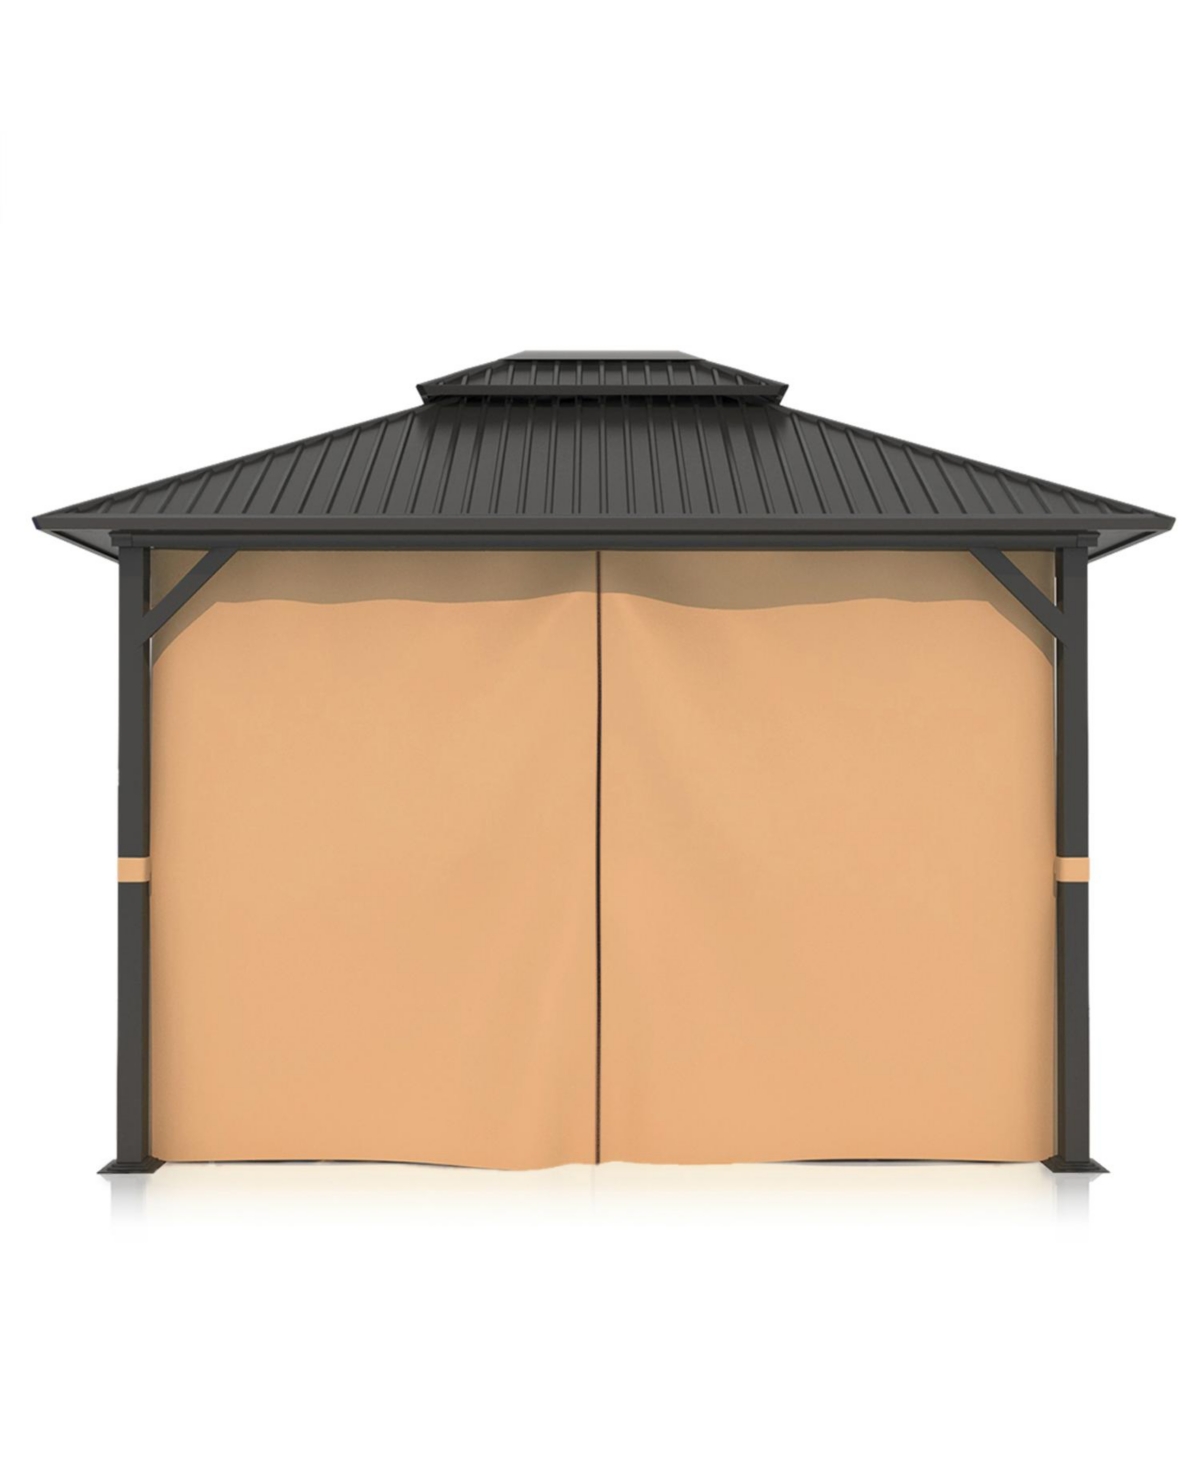 10' x 10' Gazebo Curtain Set Protecting Privacy Side Walls 4 Panels - Khaki